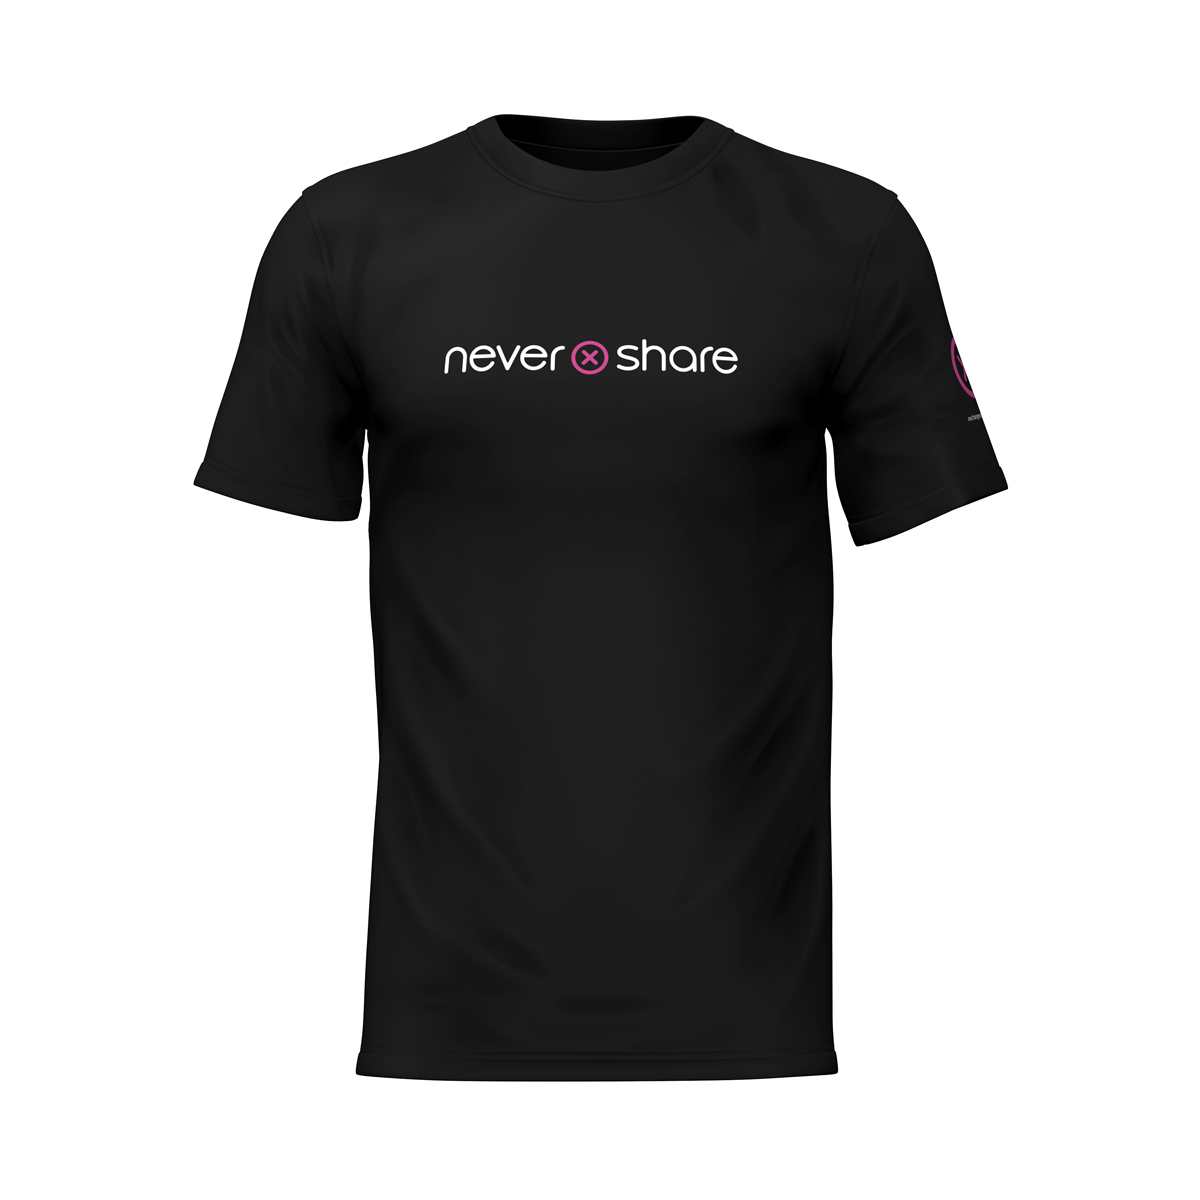 Nevershare T-shirt pack of 12 (mixed sizes)